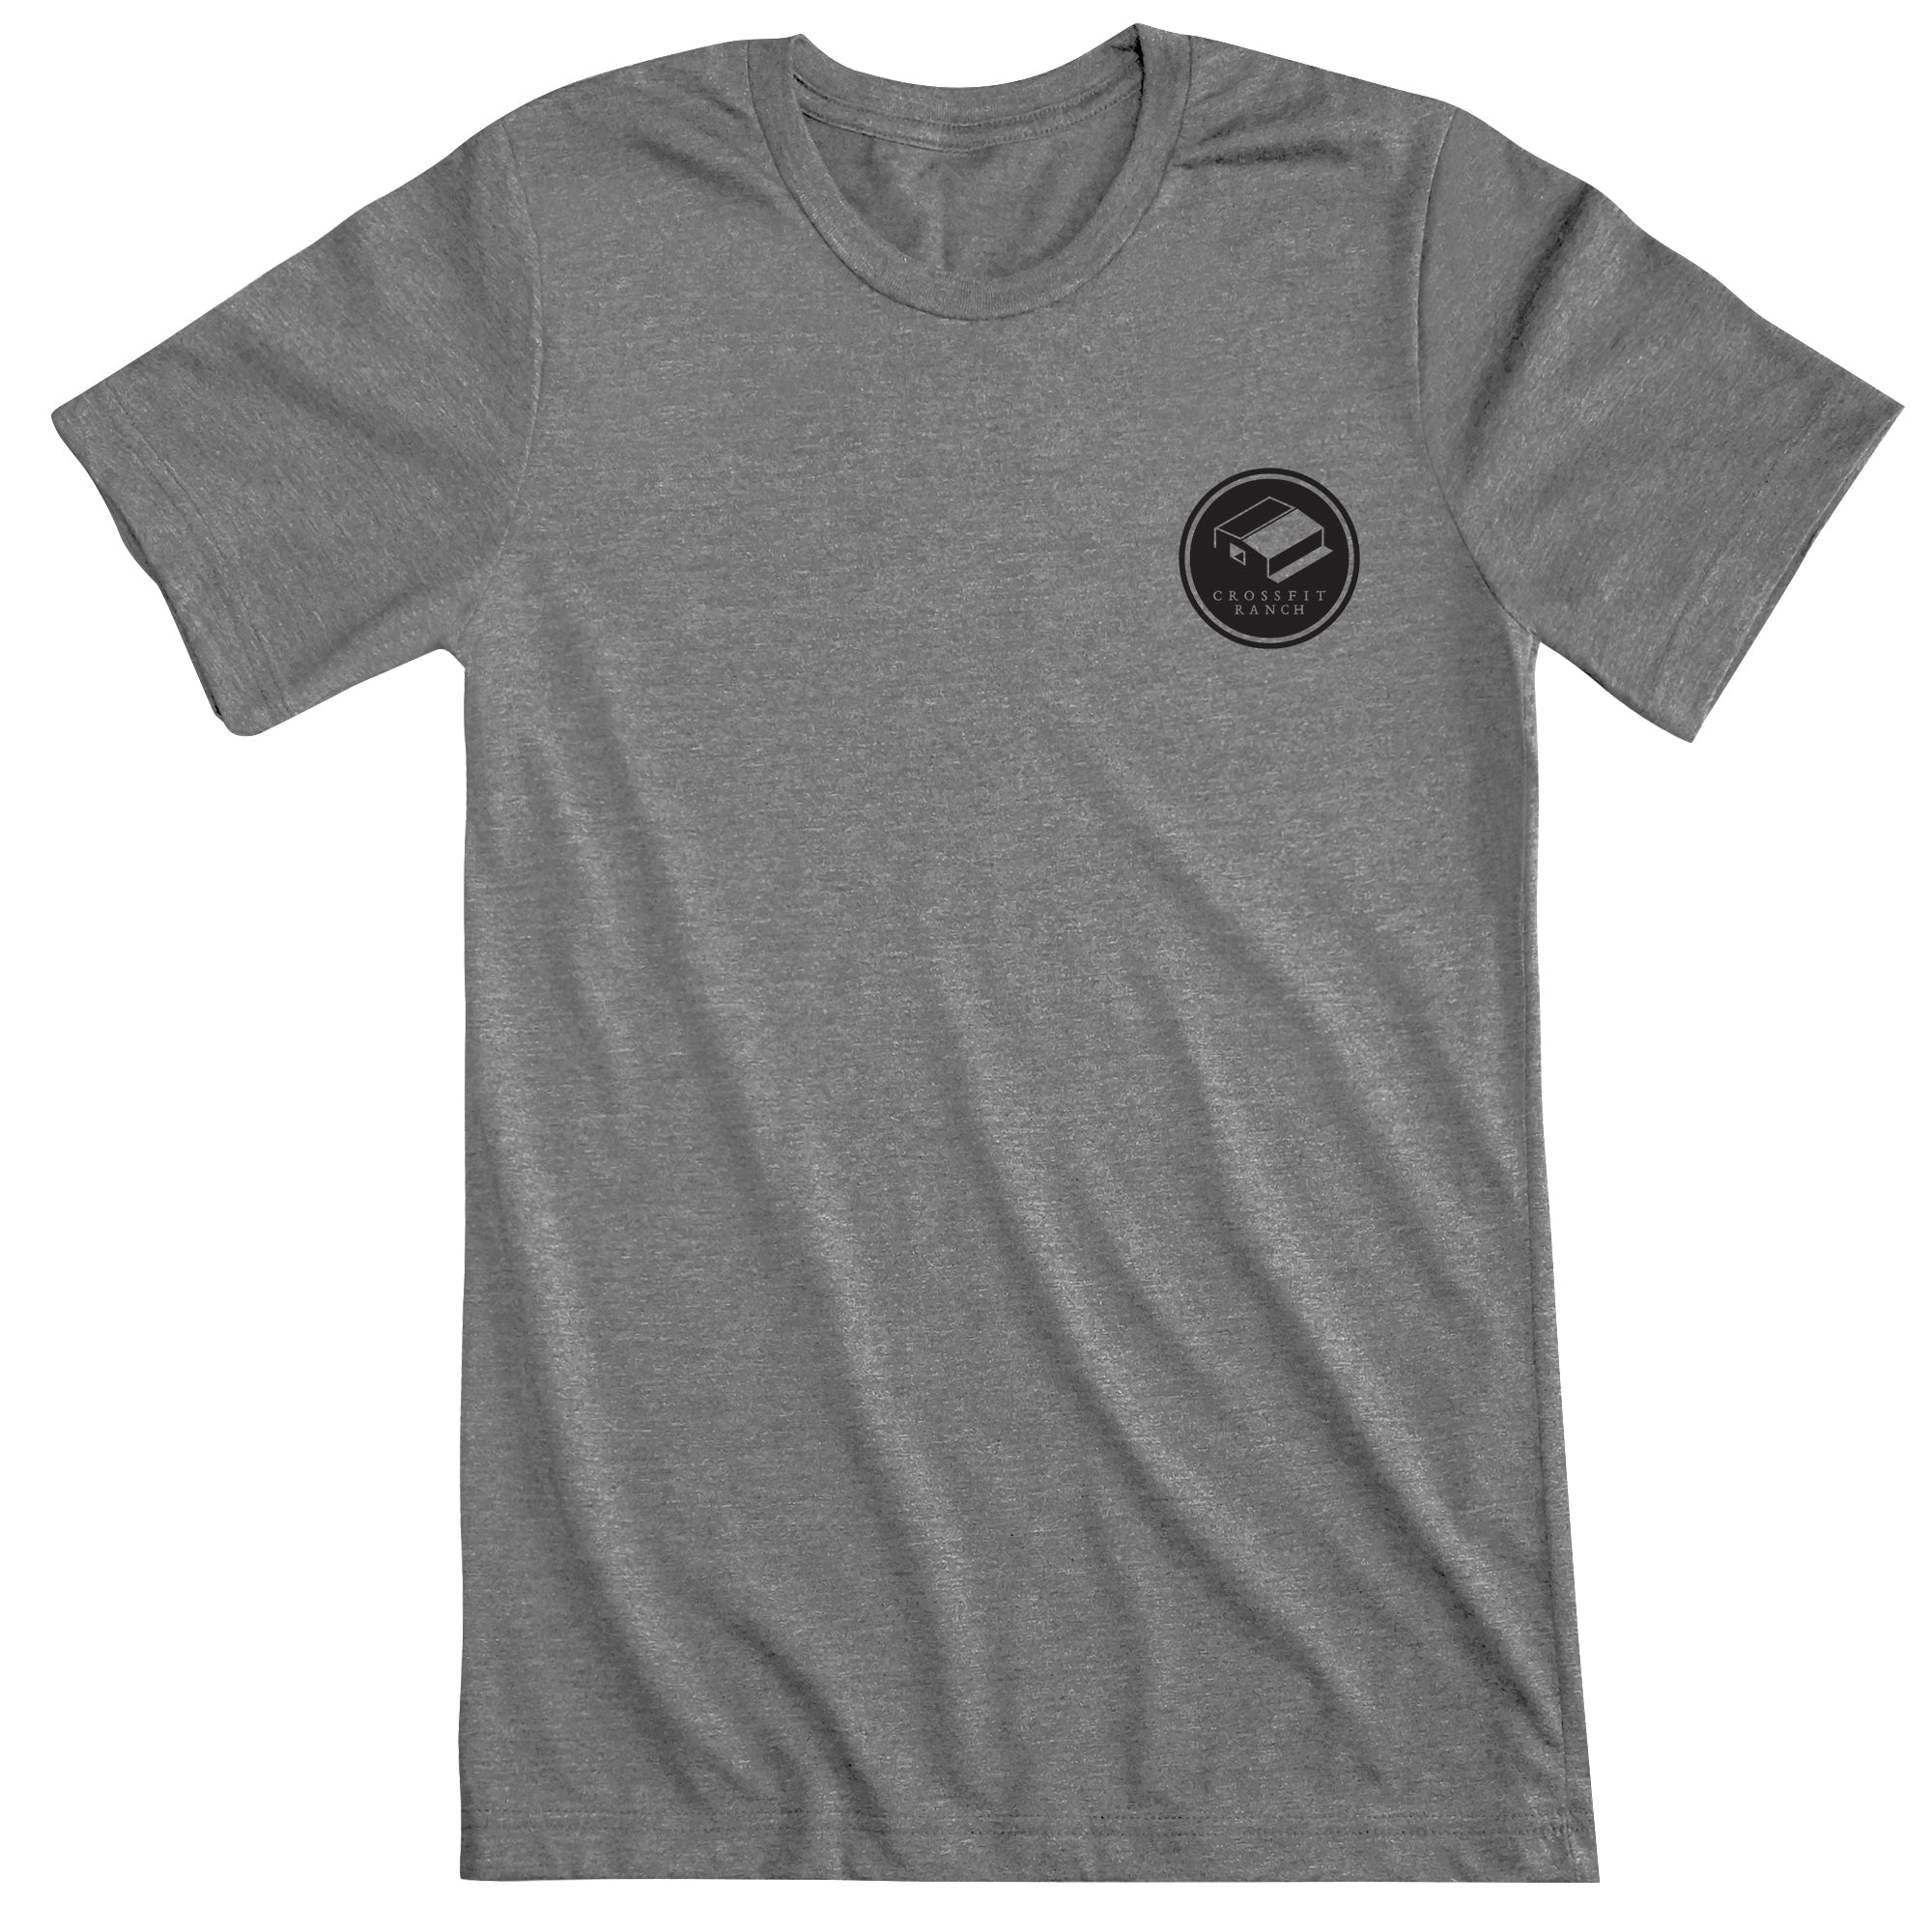 The Icon Men's Tri-blend T-Shirt